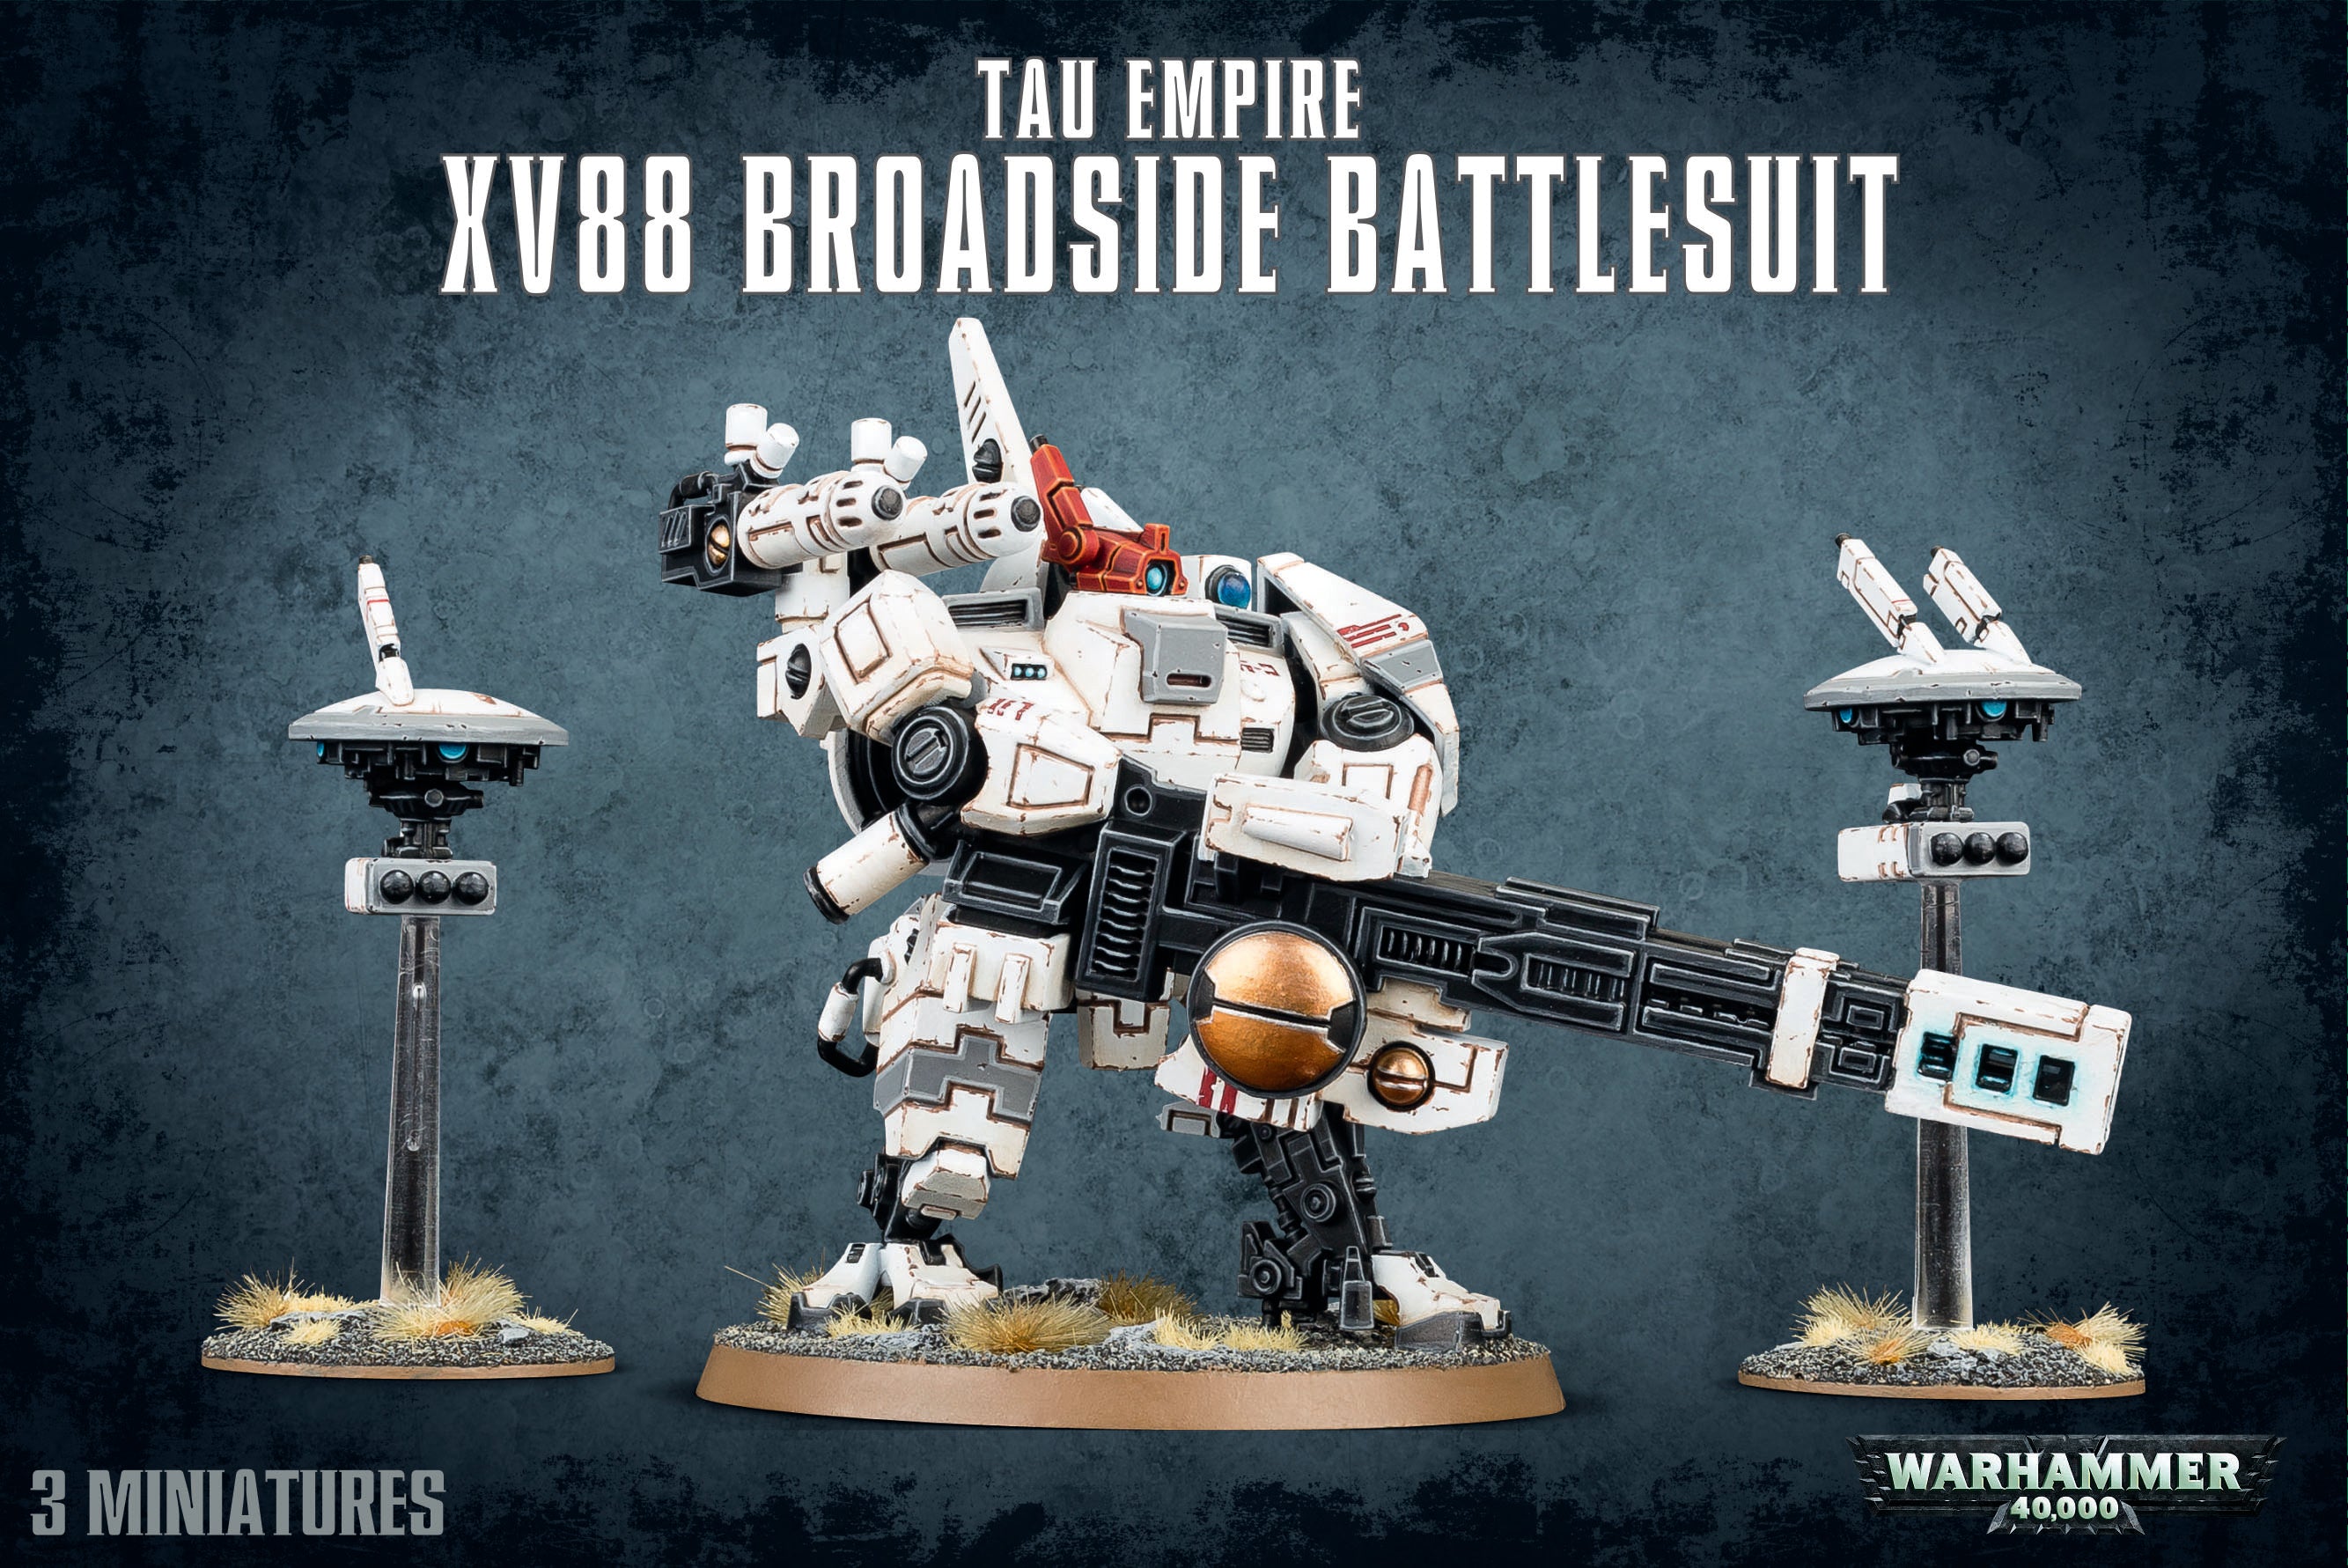 T'au Empire VX88 Broadside Battlesuit